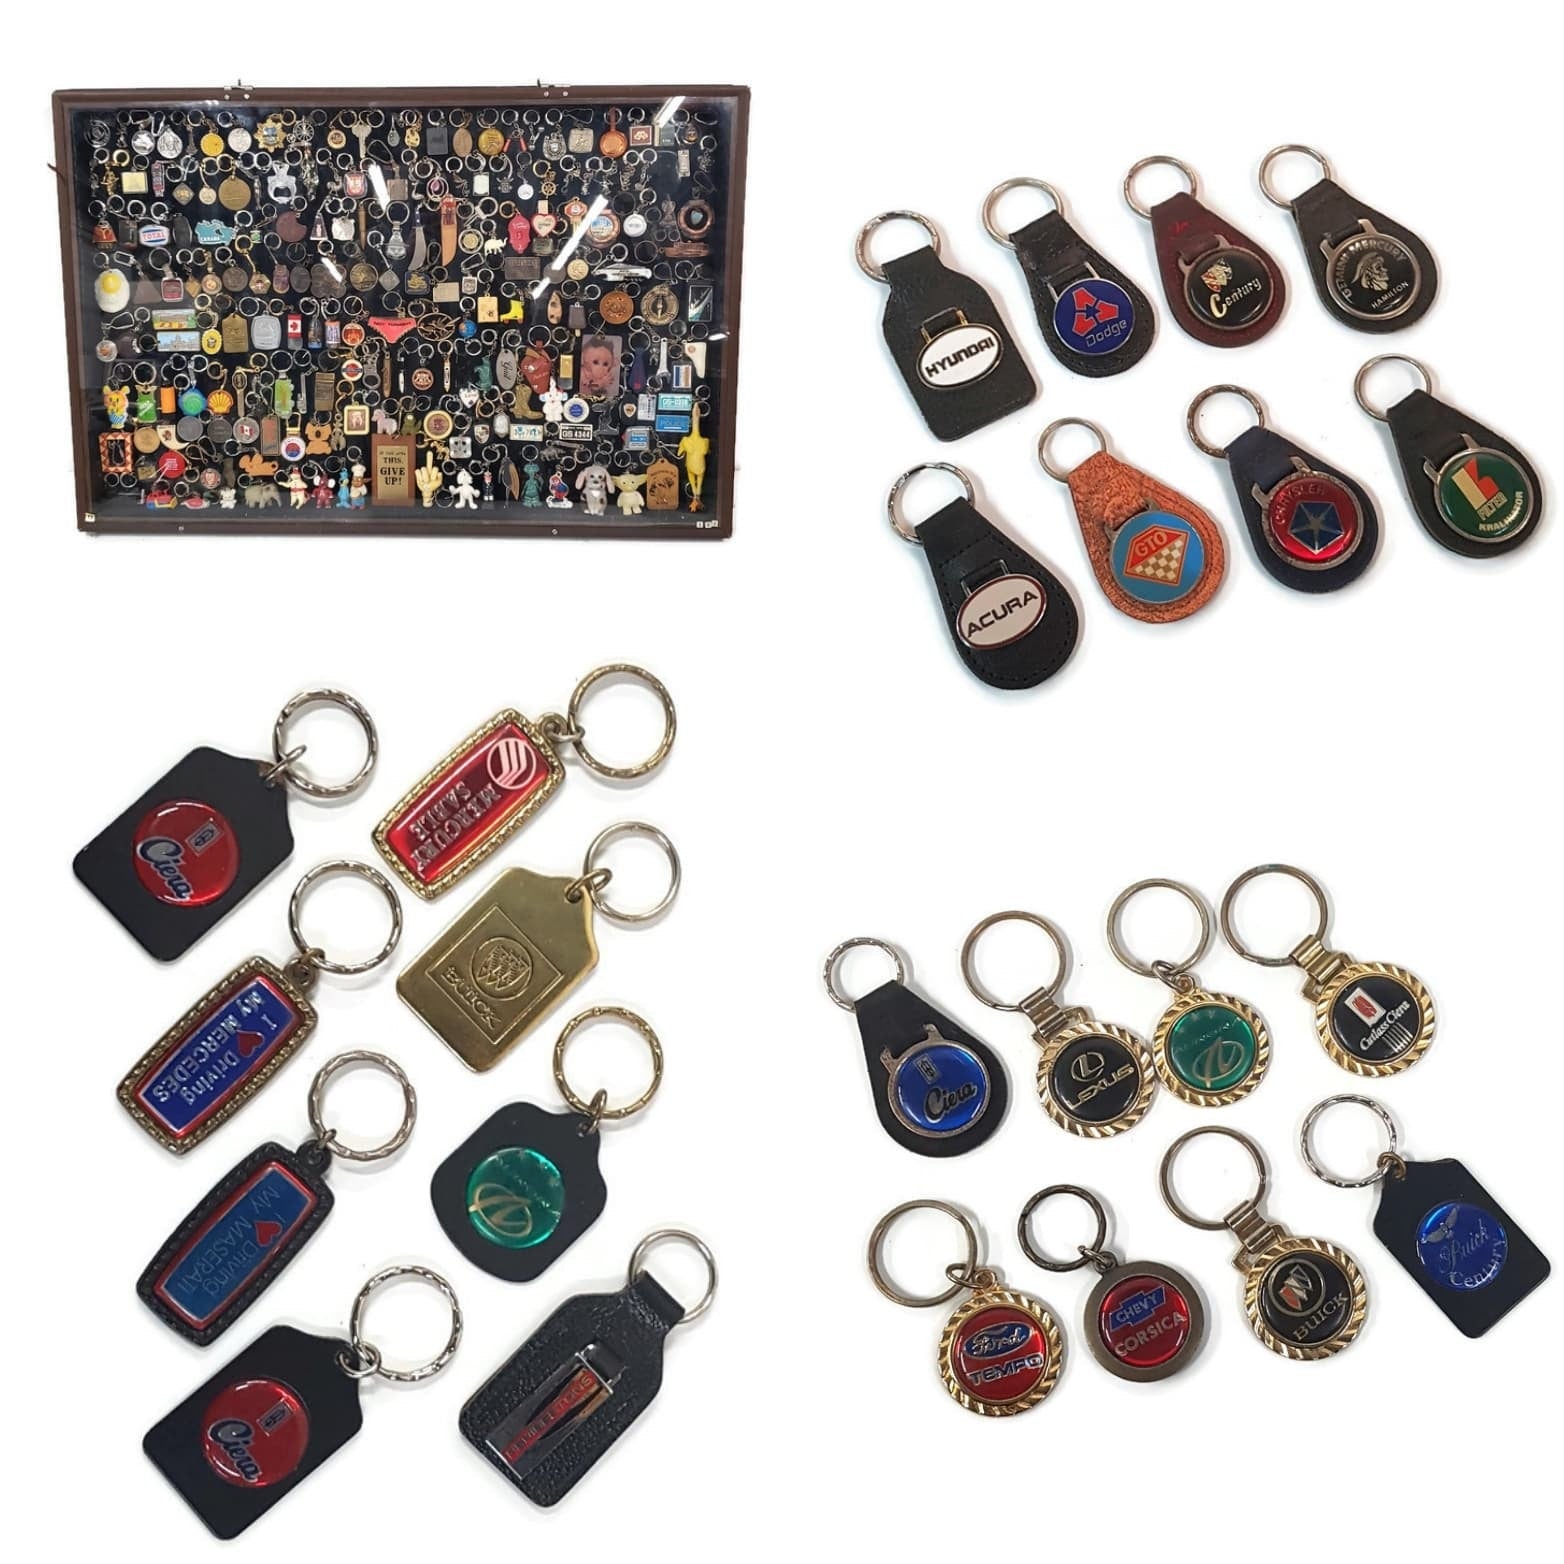 oldsmobile calais key chain keychain key fob keytag vintage automotove keychain gift collectible